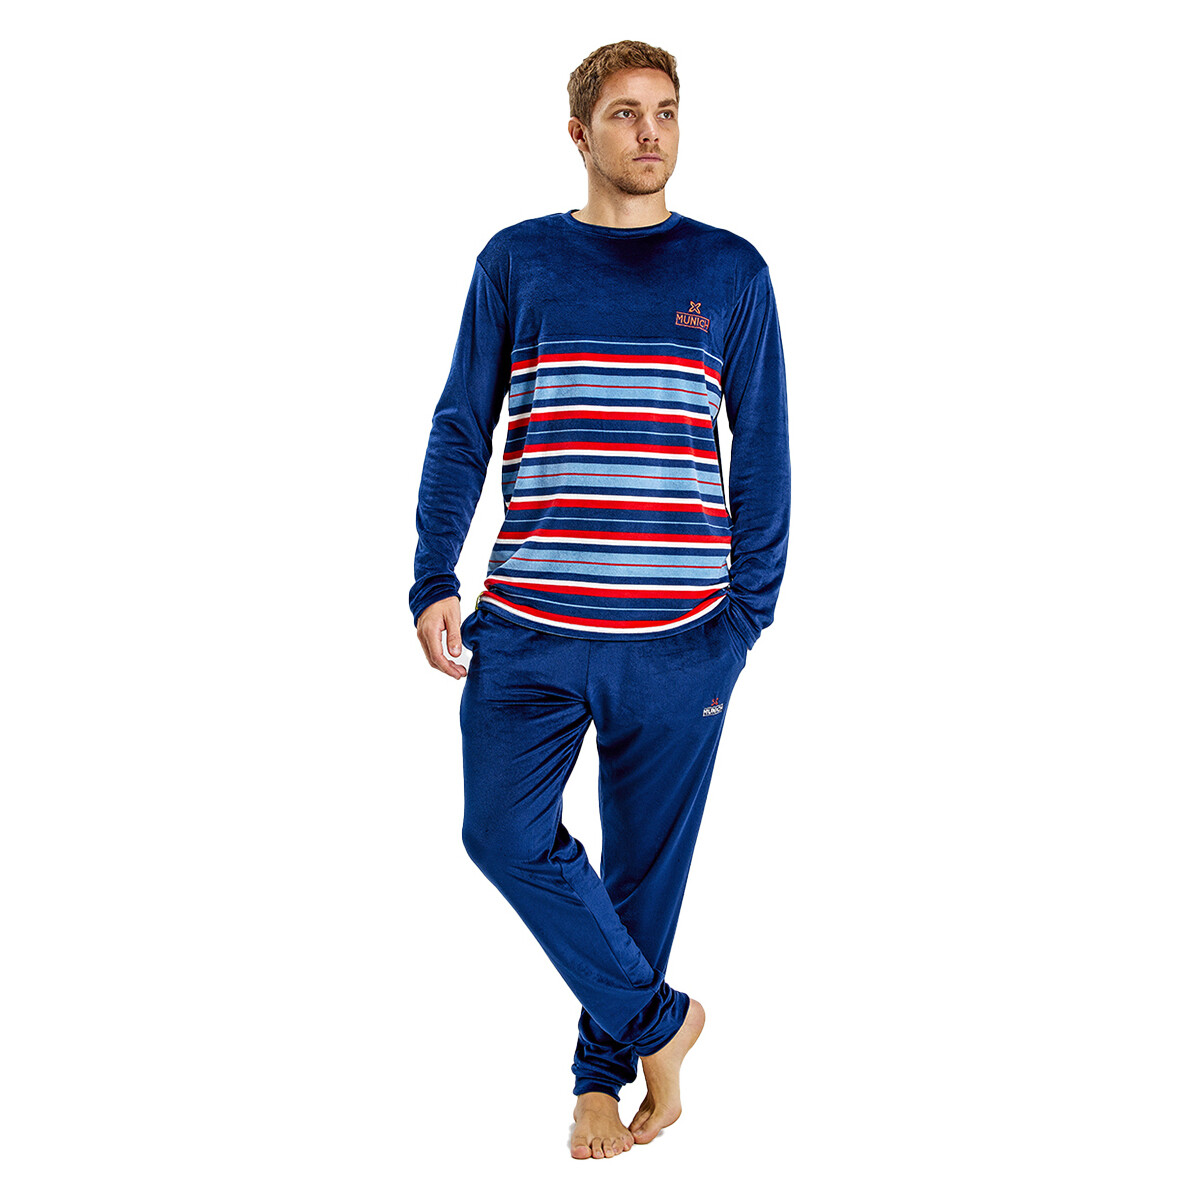 textil Herr Pyjamas/nattlinne Munich MUDP0152 Blå